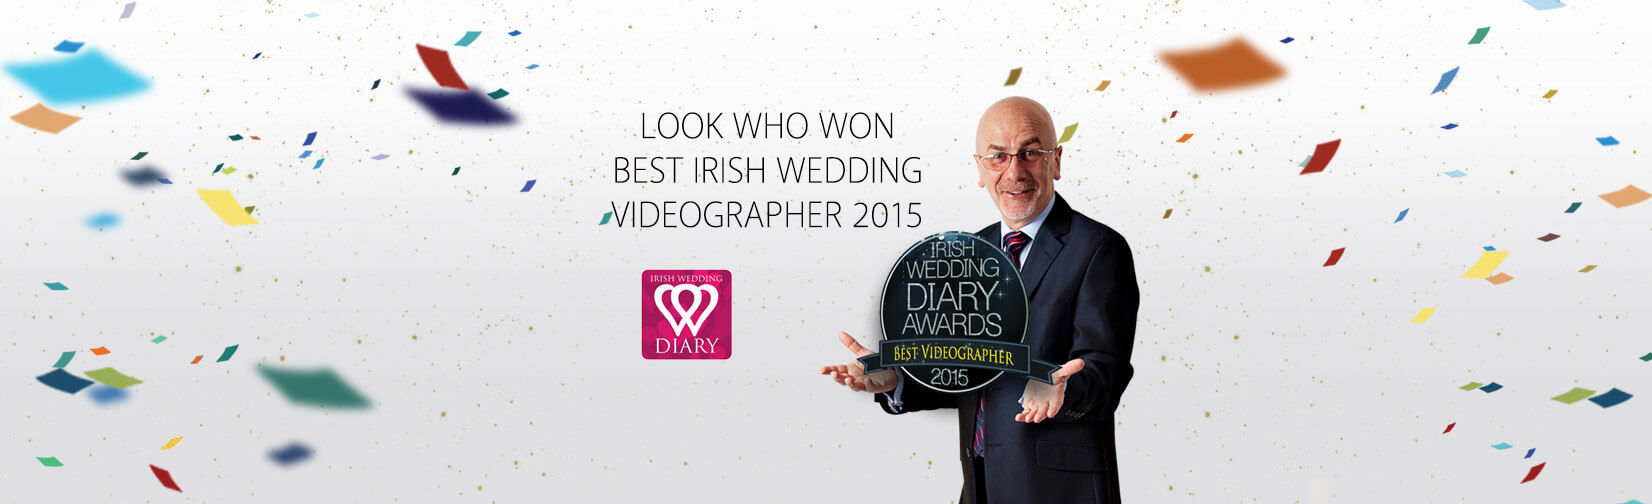 Winner of the BEST Videographer in Ireland